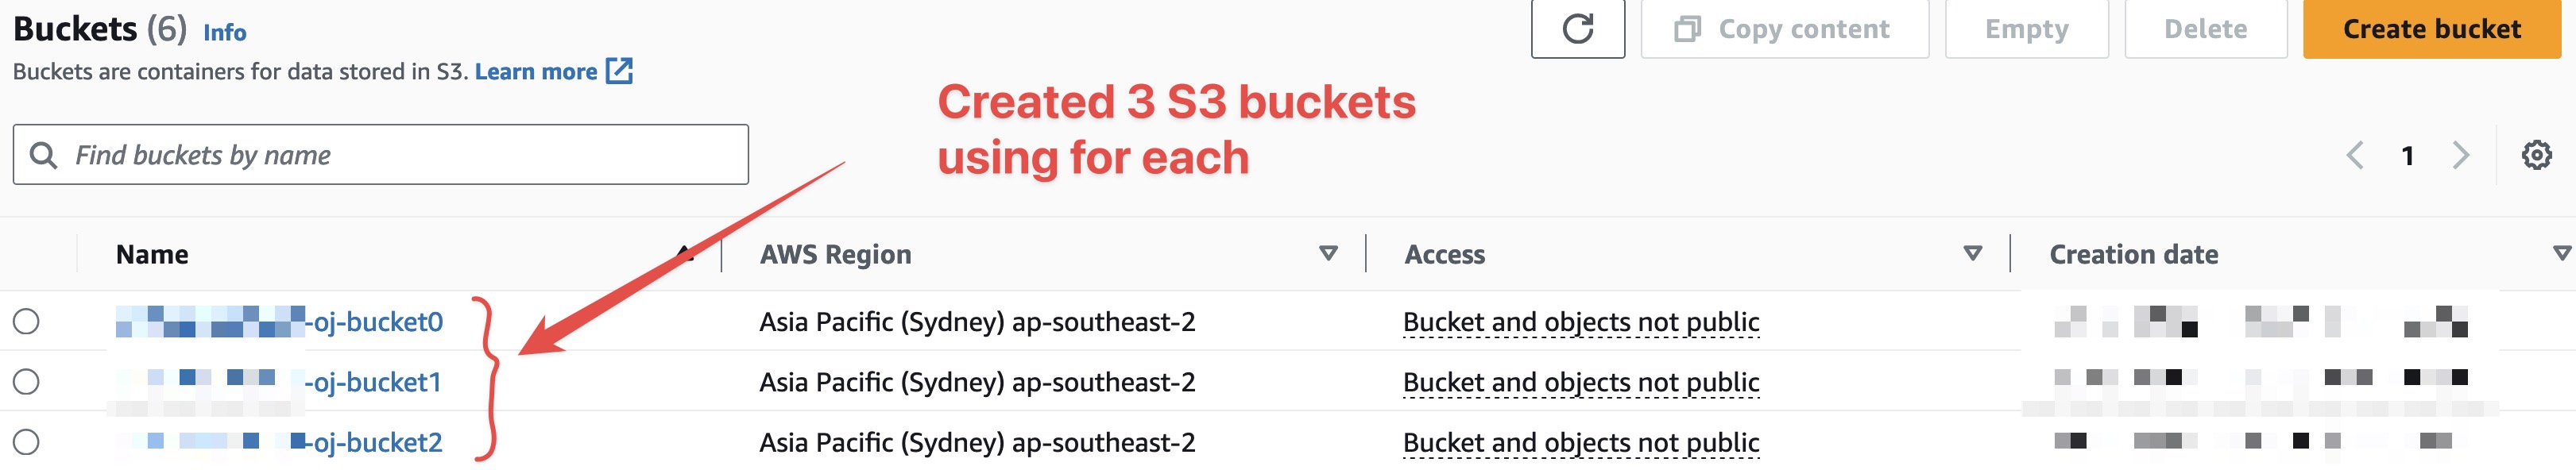 create 3 S3 buckets